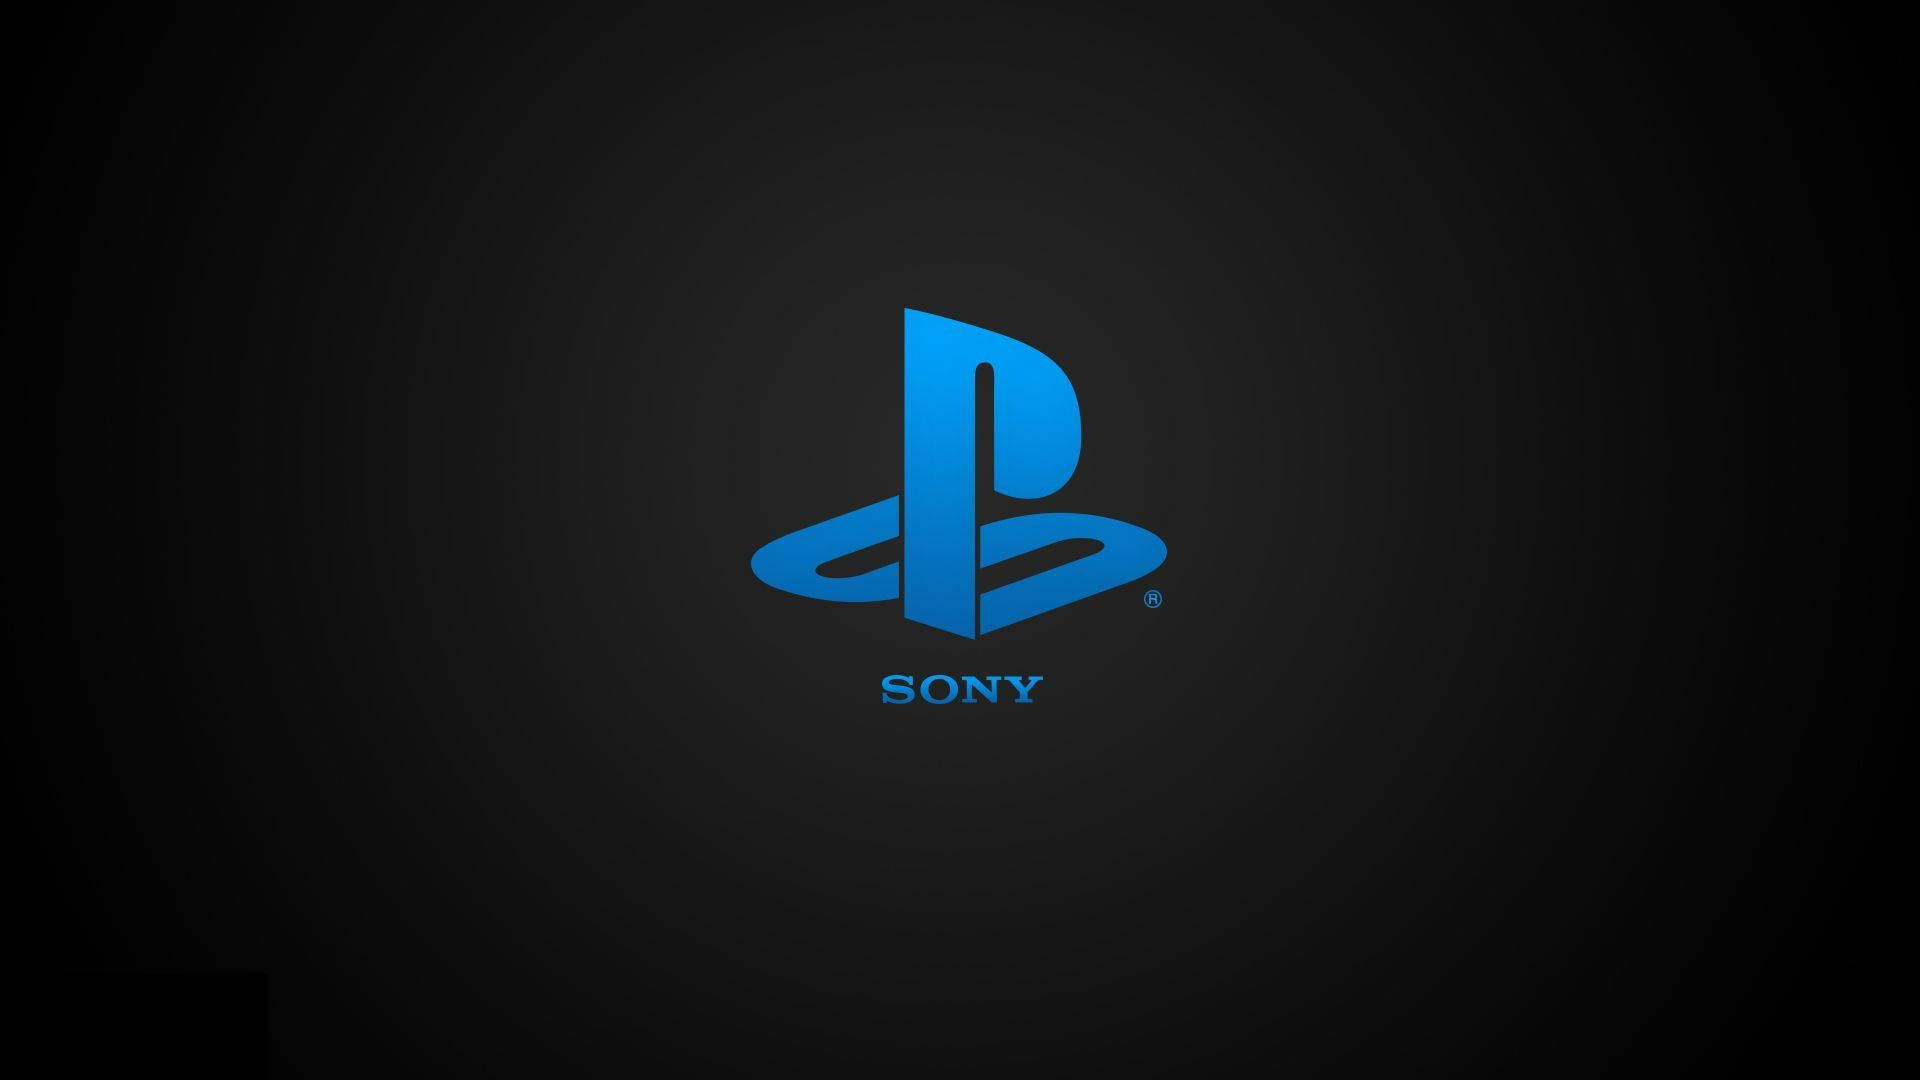 Sony PlayStation 4 PS4 desktop background wallpaper.